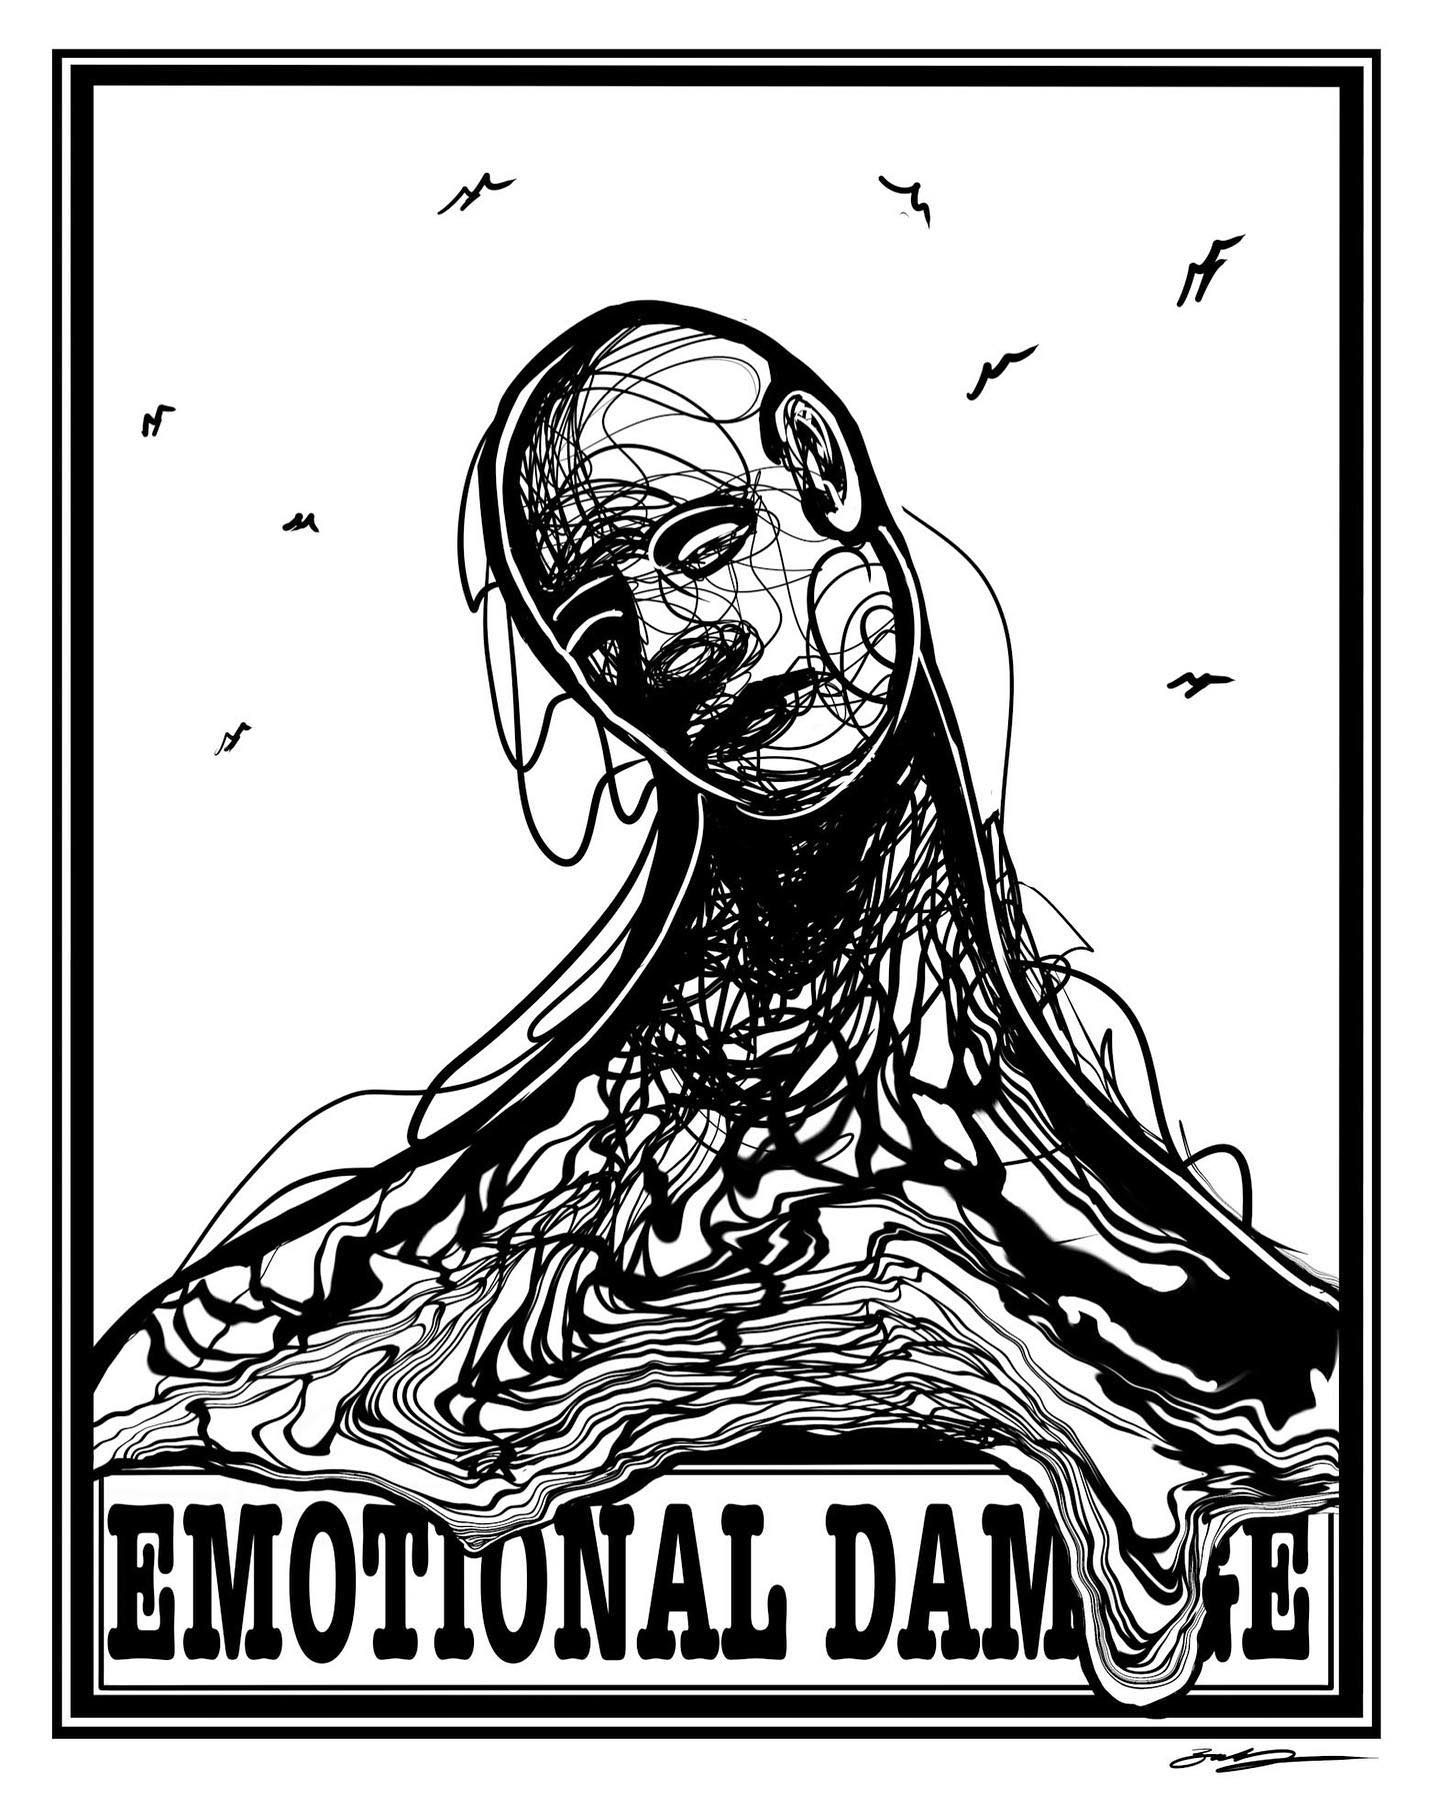 “Emotional Damage” 

#emotionaldamage #emotional #damage #emotion #mentalhealth #digitalart #drawing #scribble #scribble